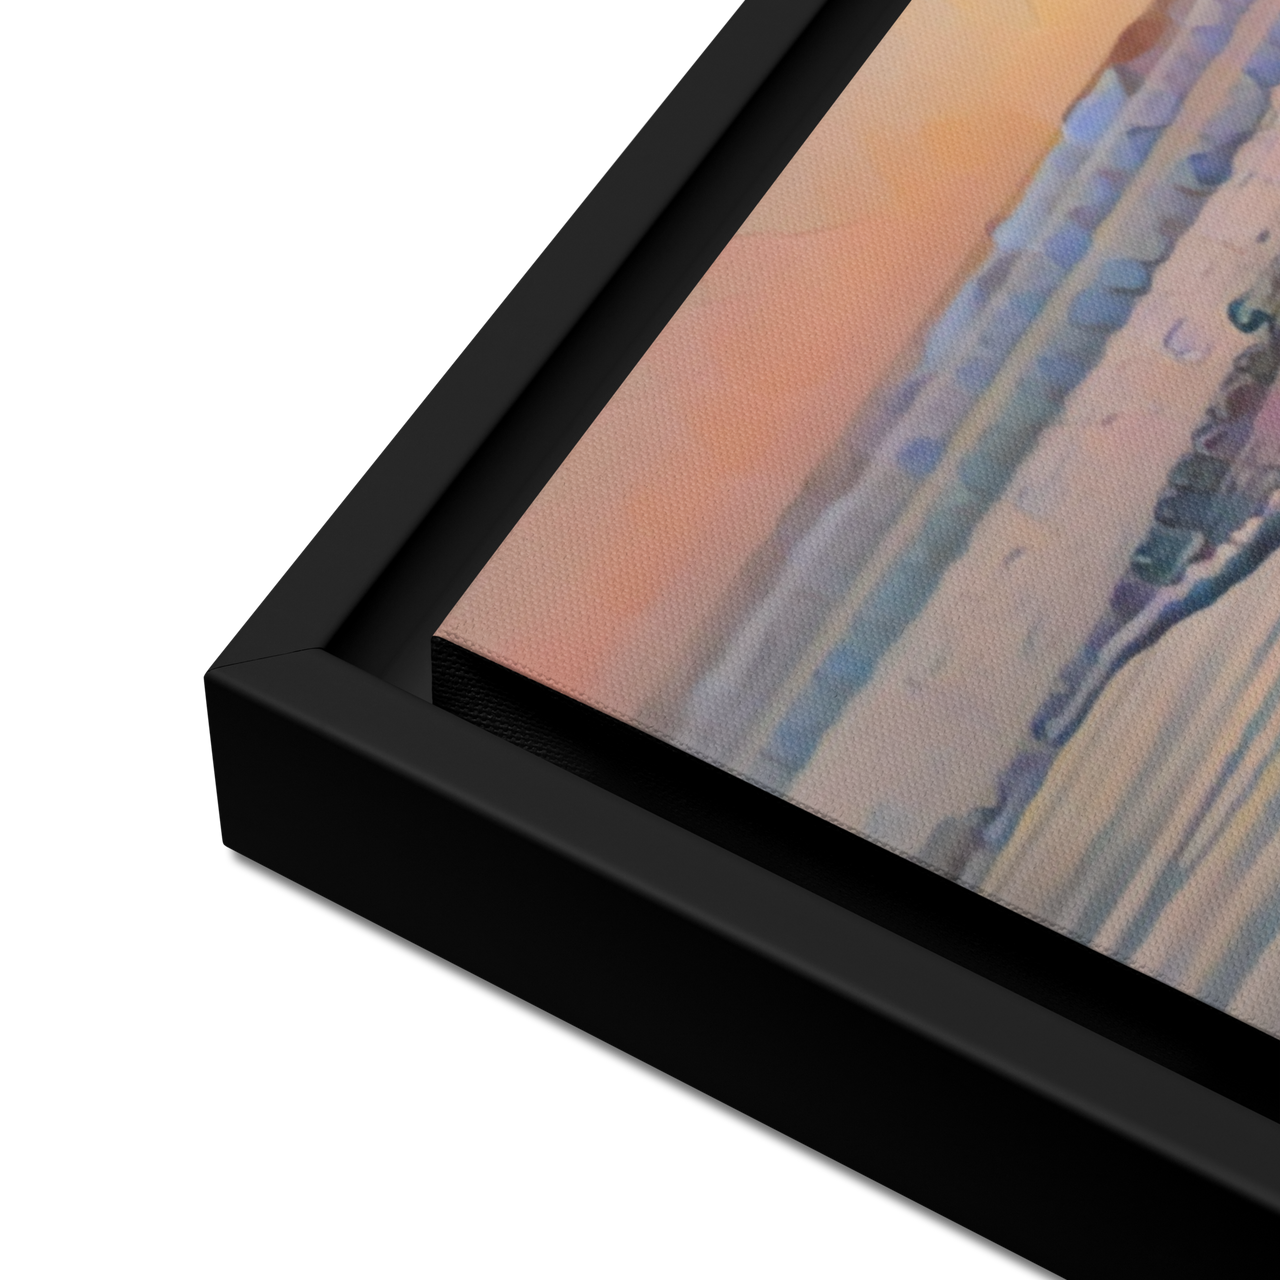 Oregon Sand Dollars - Digital Art -Framed canvas - FREE SHIPPING